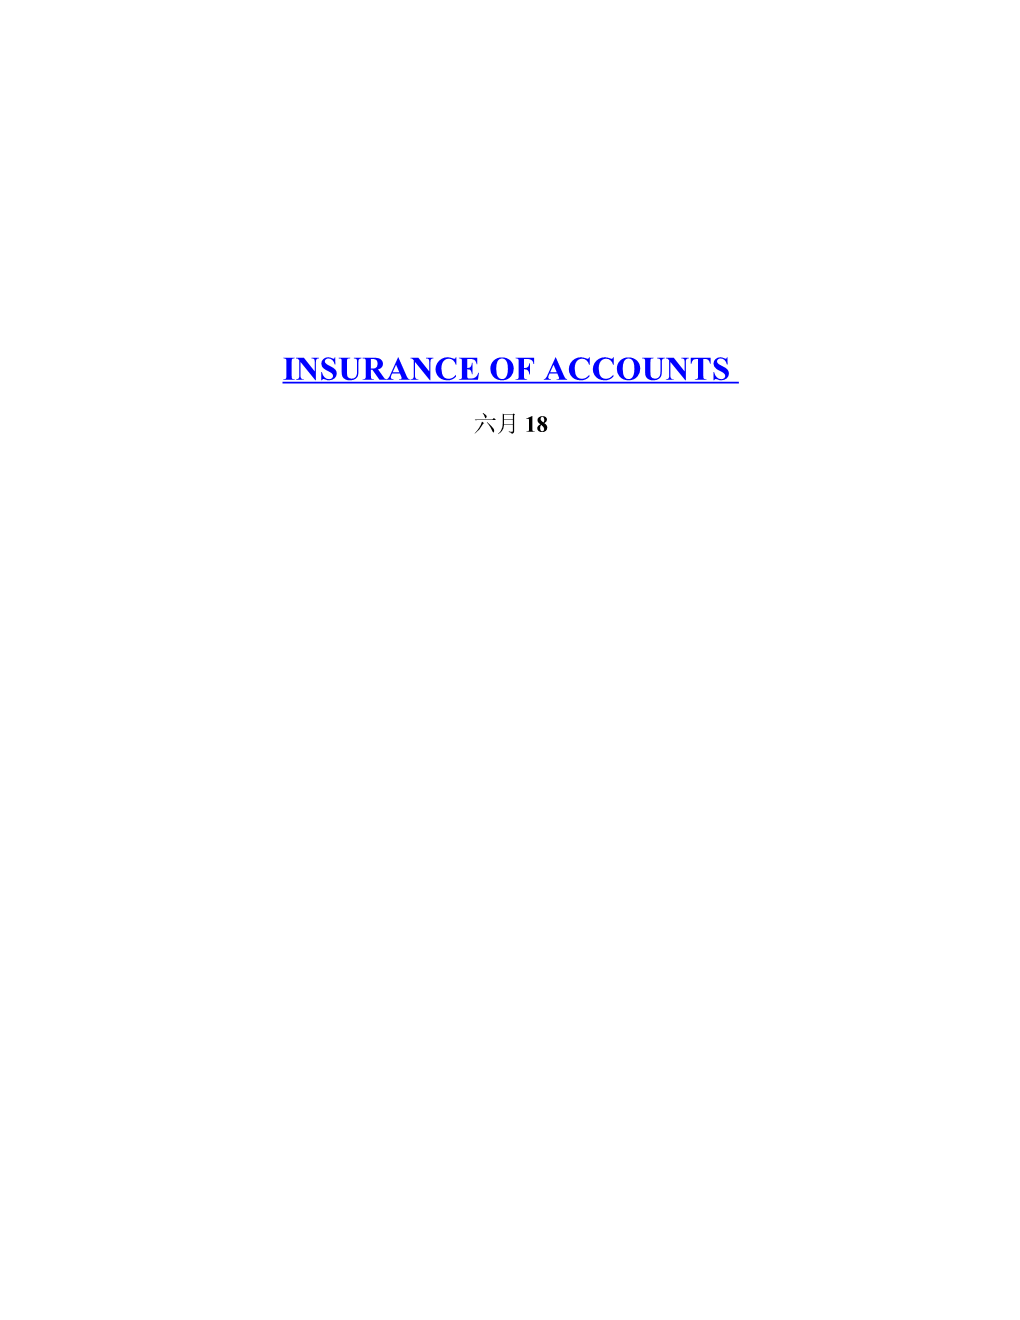 Insurance of Accounts